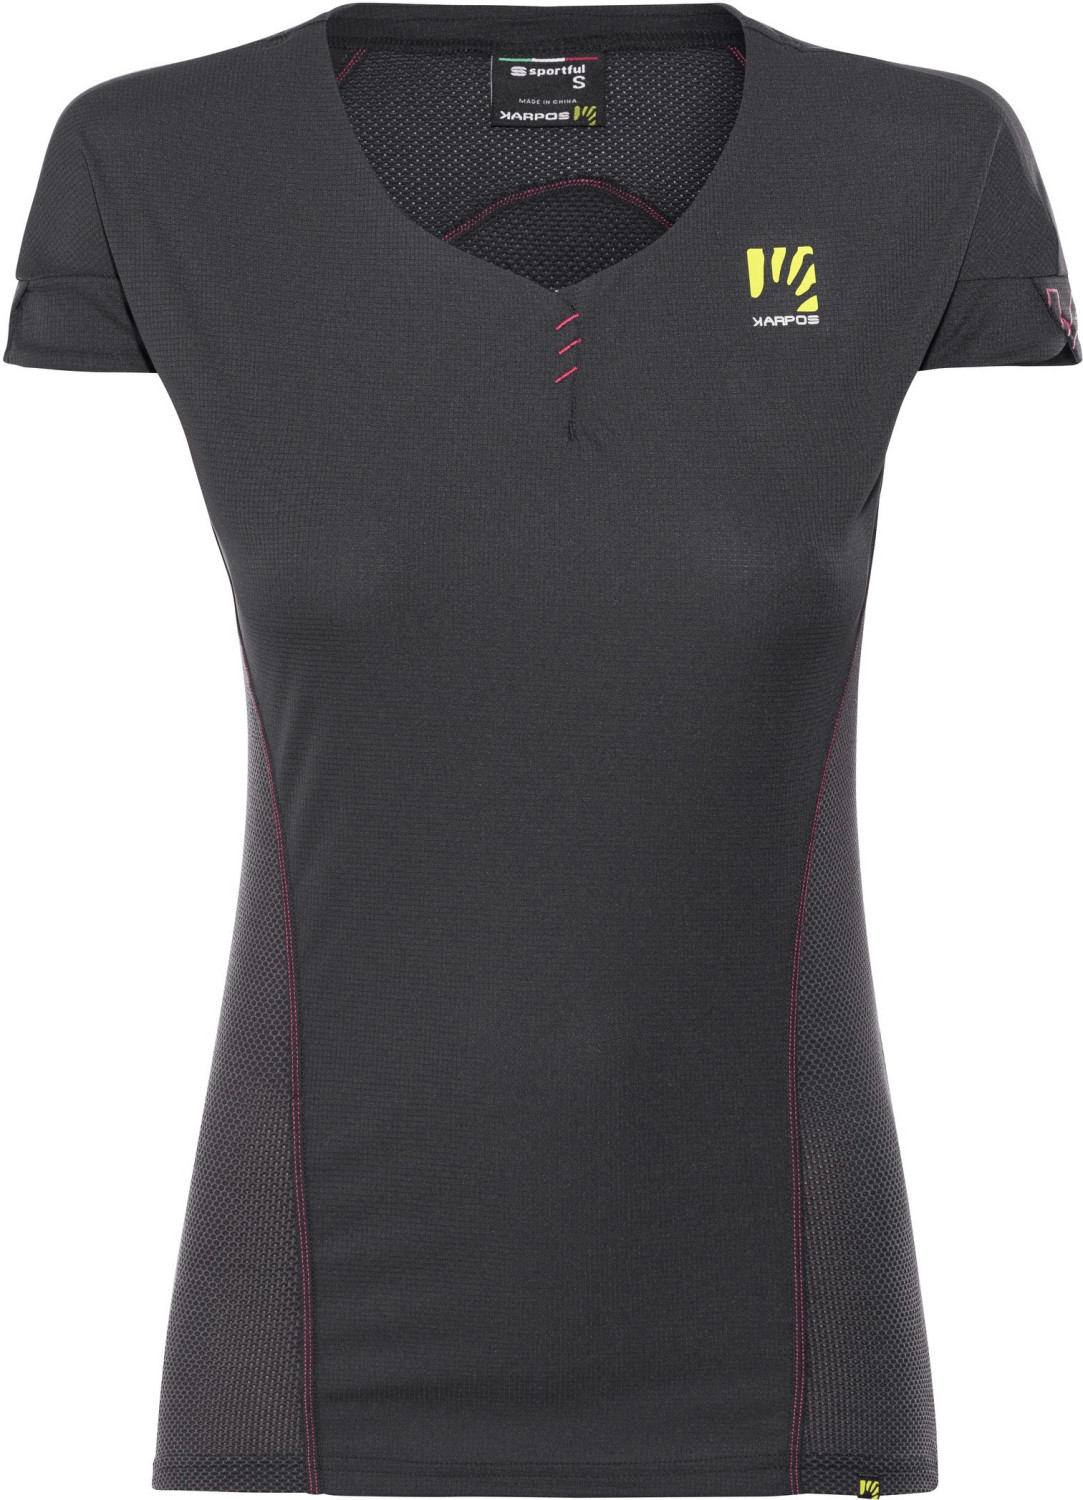 KARPOS Moved Jersey T-Shirt ab € 41,99 | Preisvergleich bei idealo.at